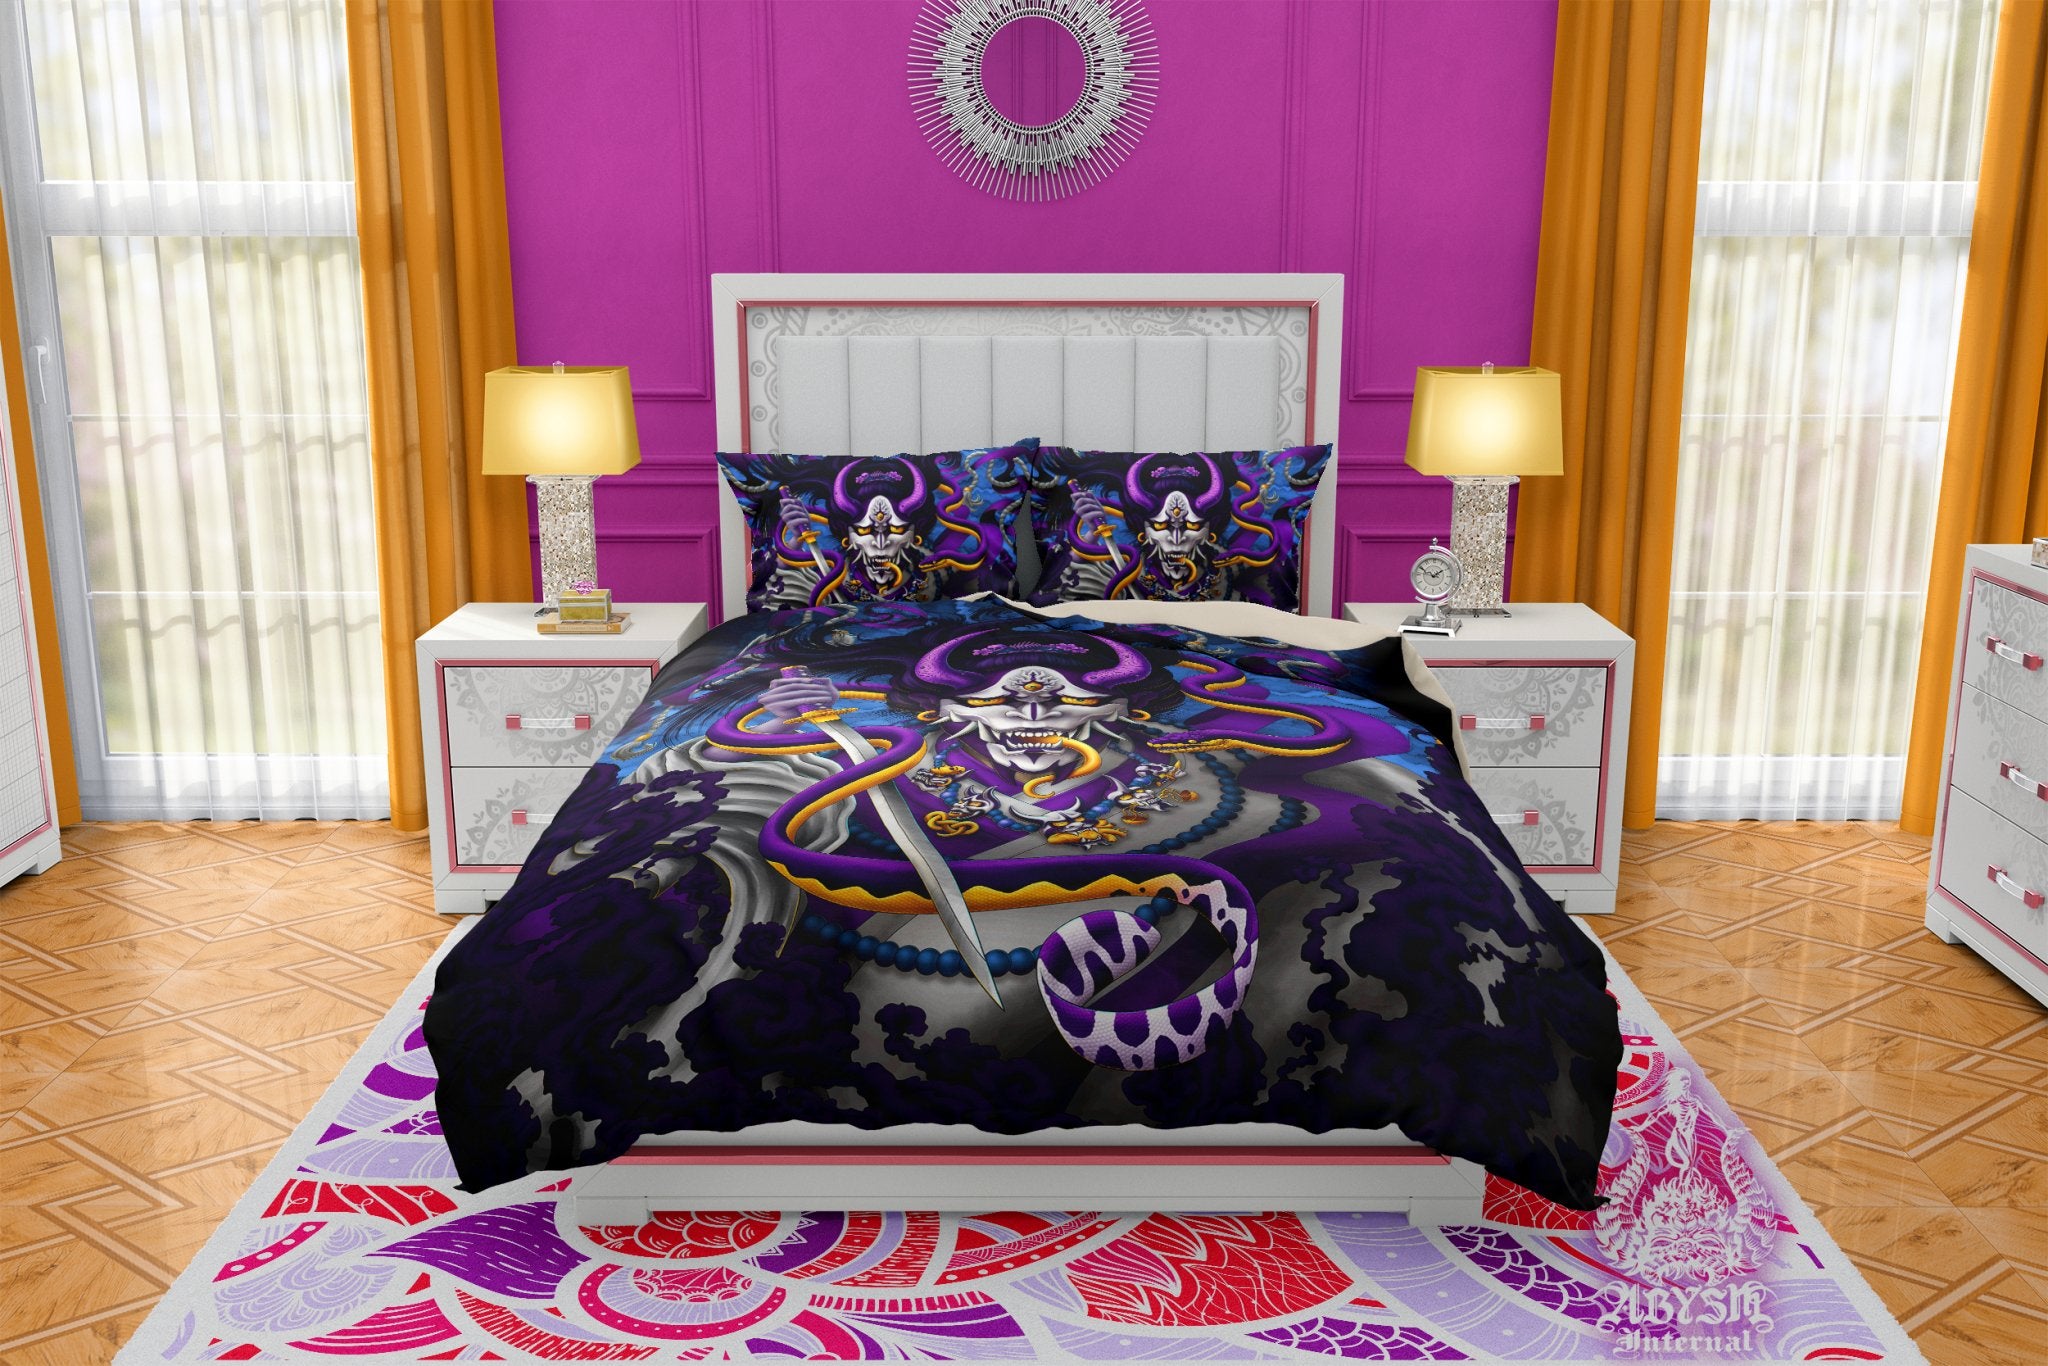 Hannya Bedding Set, Comforter or Duvet, Anime Bed Cover, Japanese Demon Bedroom Decor, King, Queen & Twin Size - Snake, Blue Purple - Abysm Internal